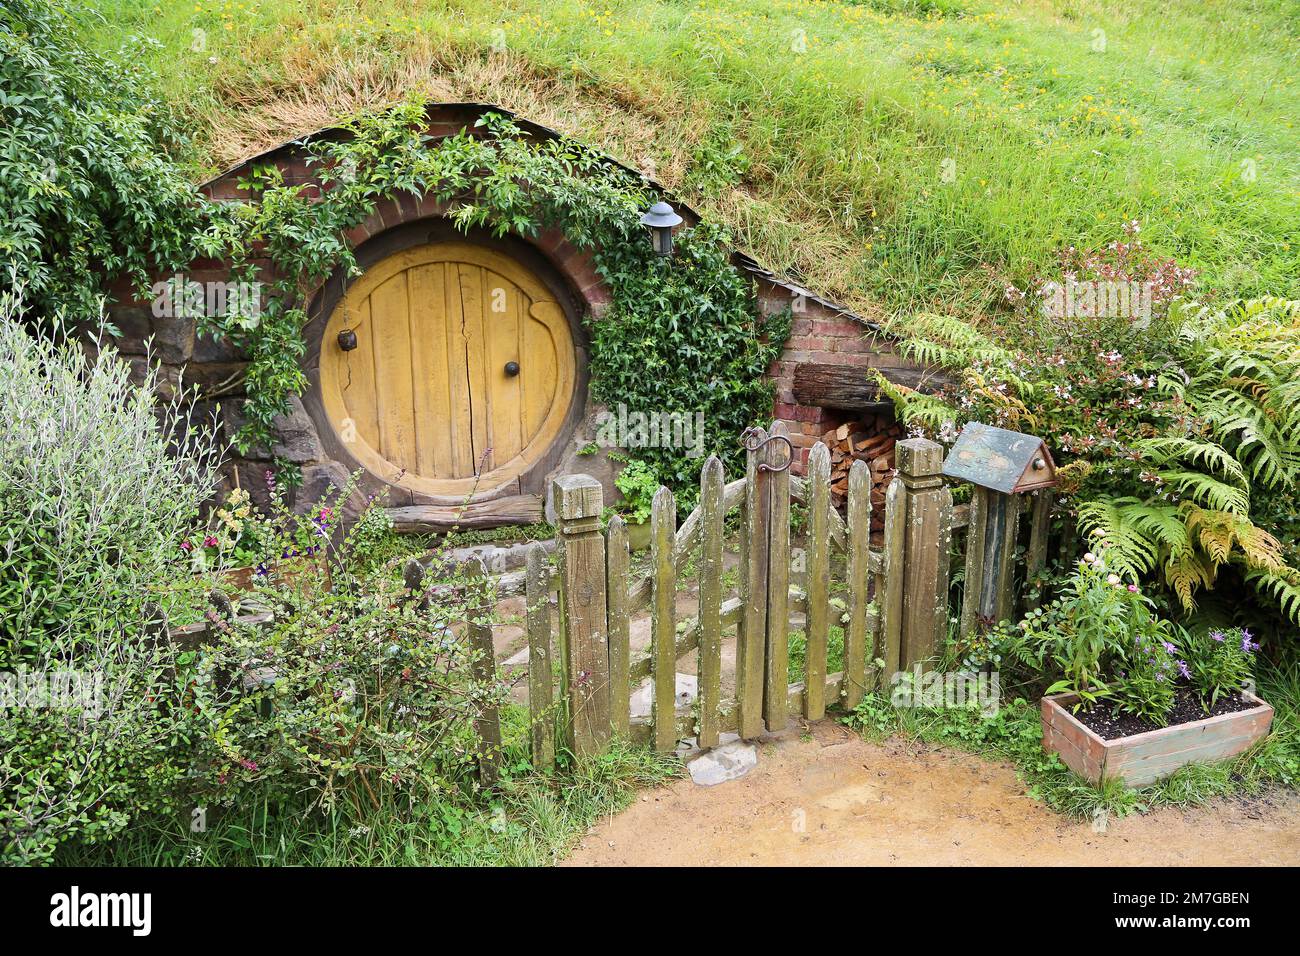 Hobbit house with yellow door - Matamata, New Zealand Stock Photo